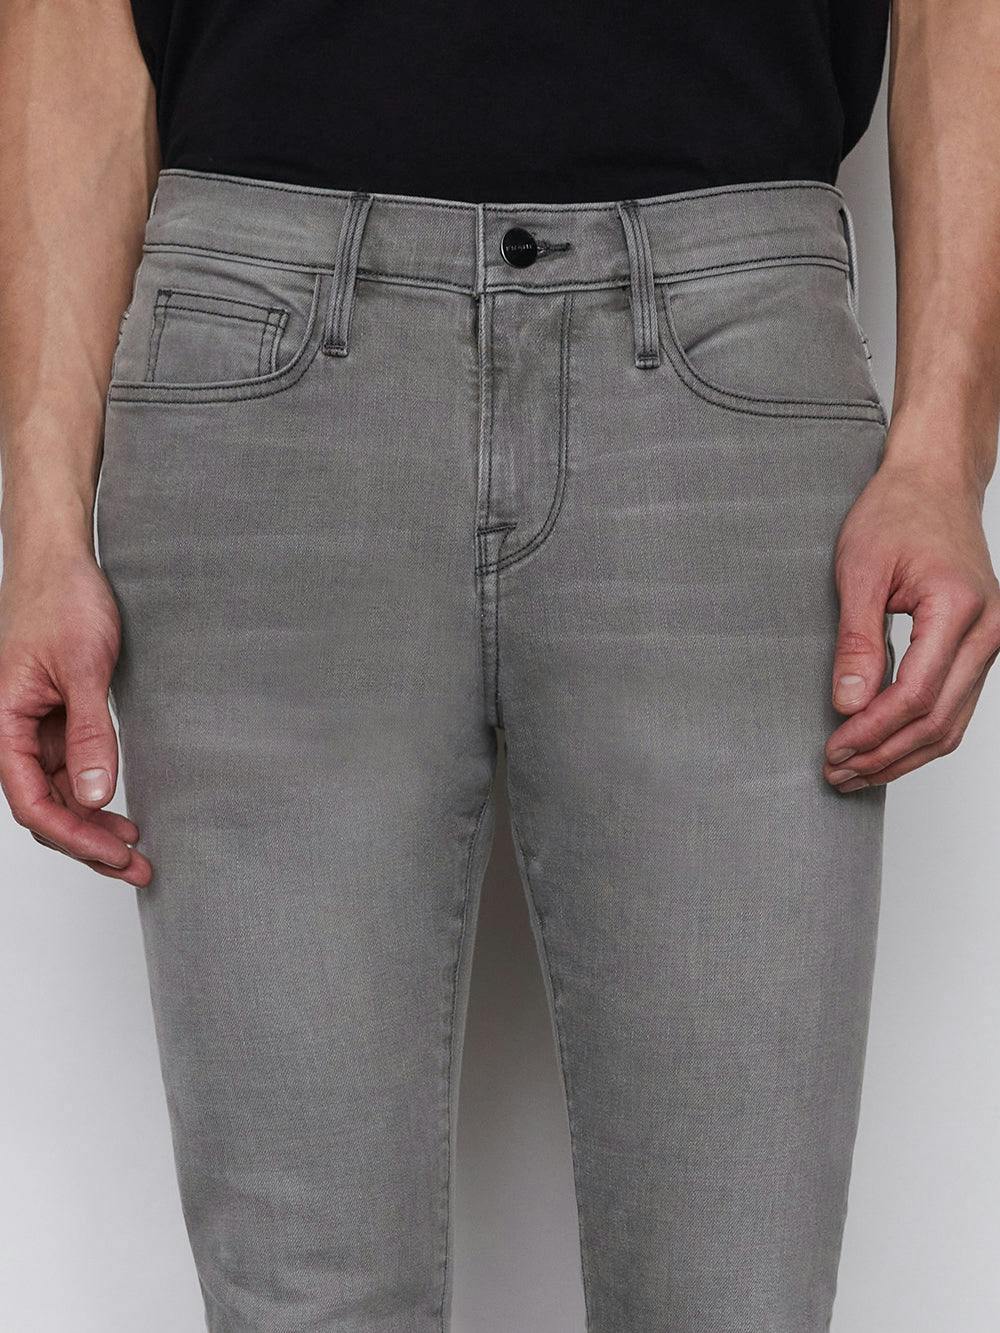 jeans detail view alt:hover